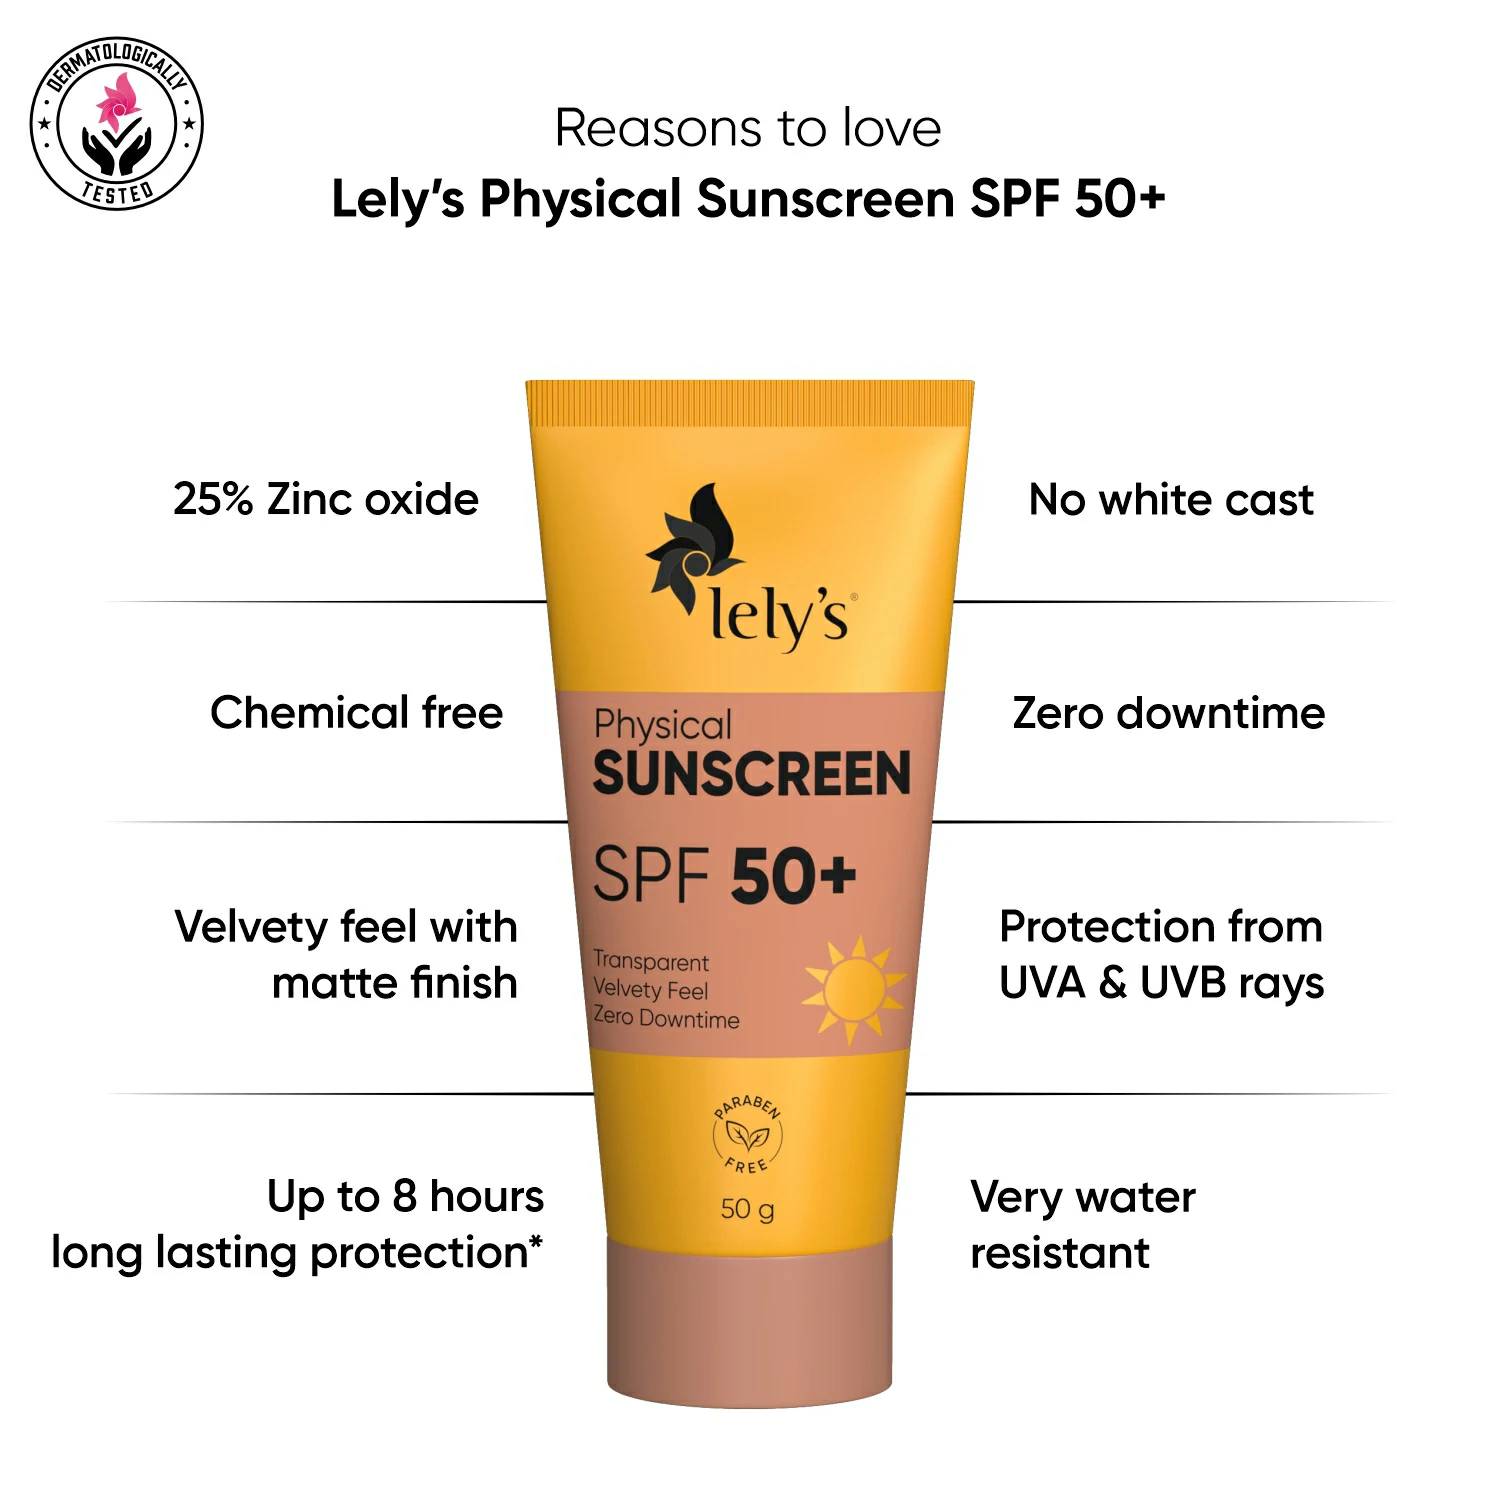 Benefits for Lelys Sunscreen